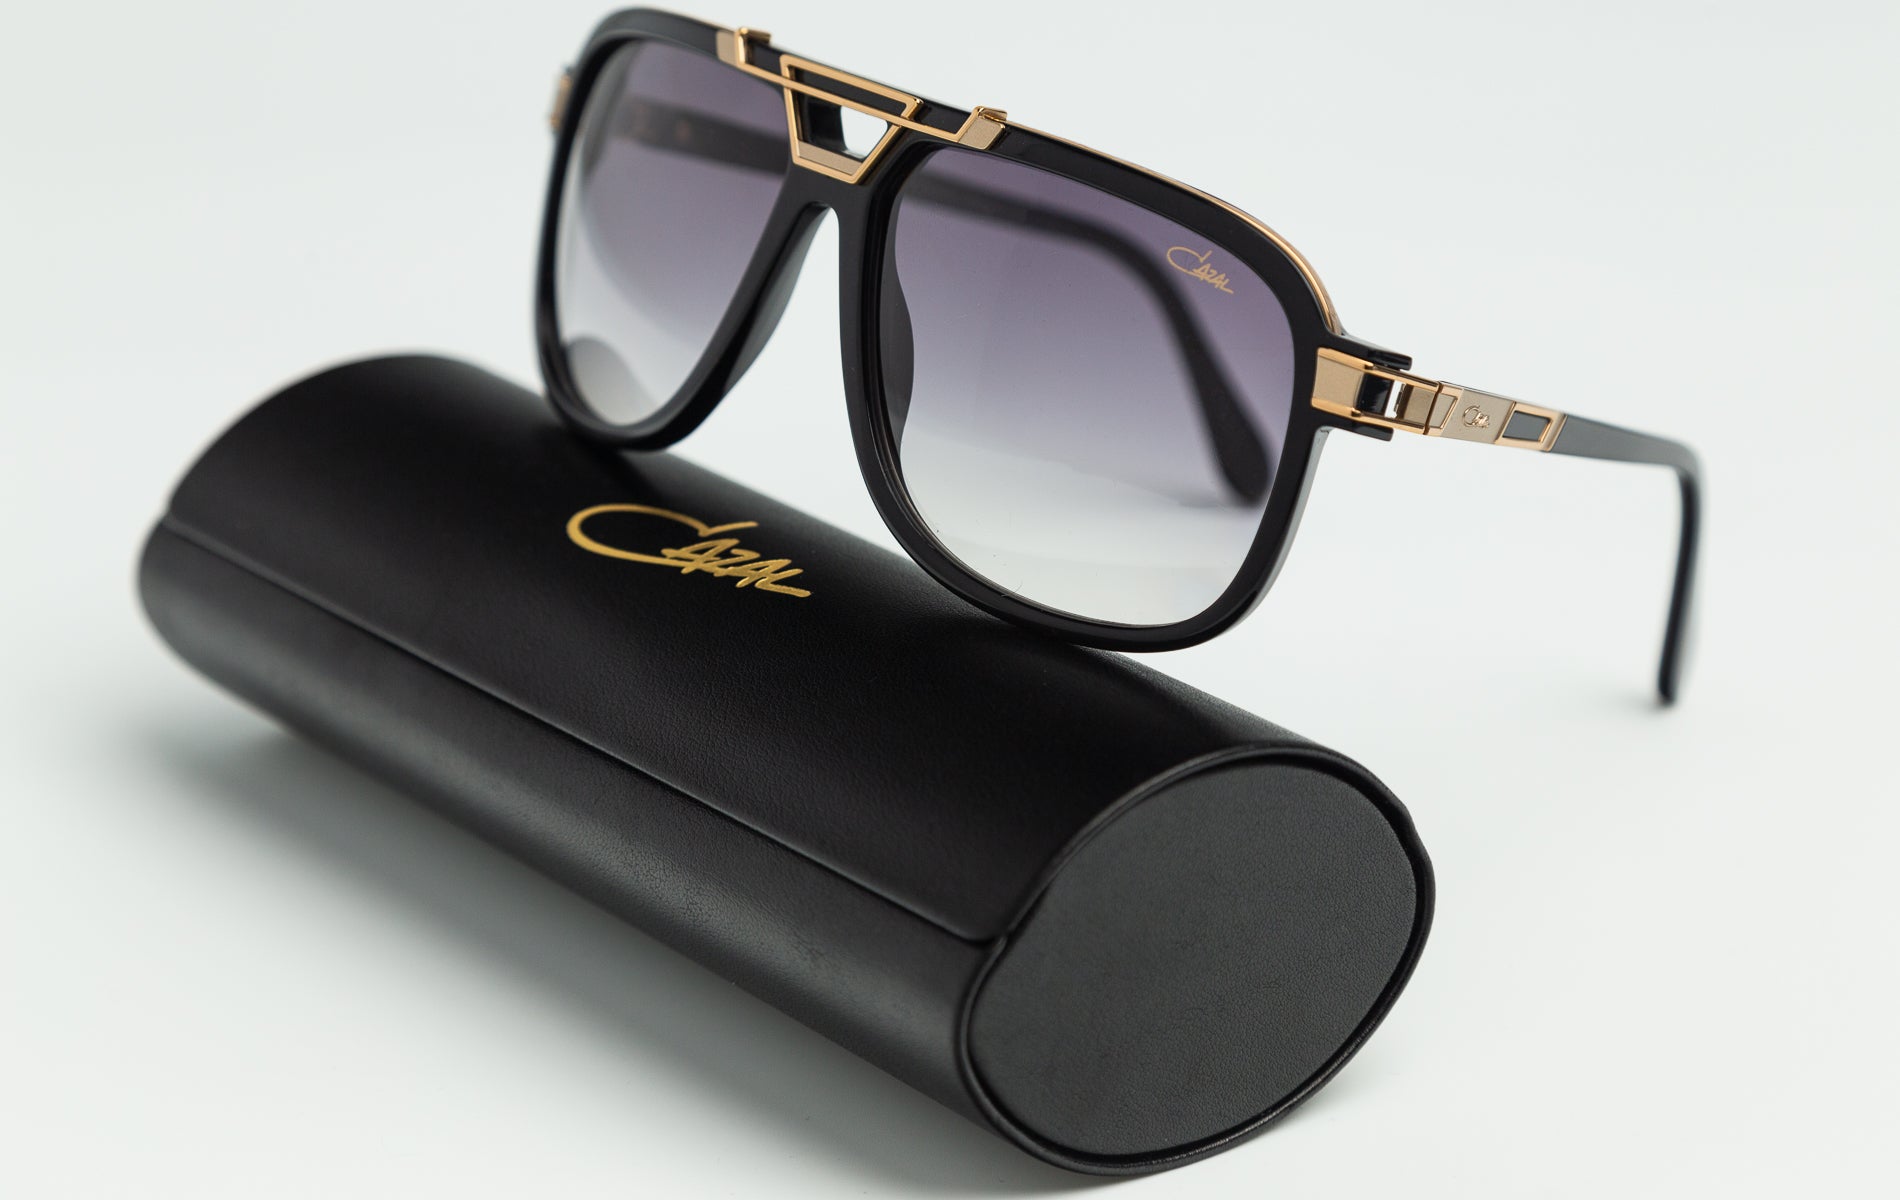 Cazal sunglasses, black and gold frame